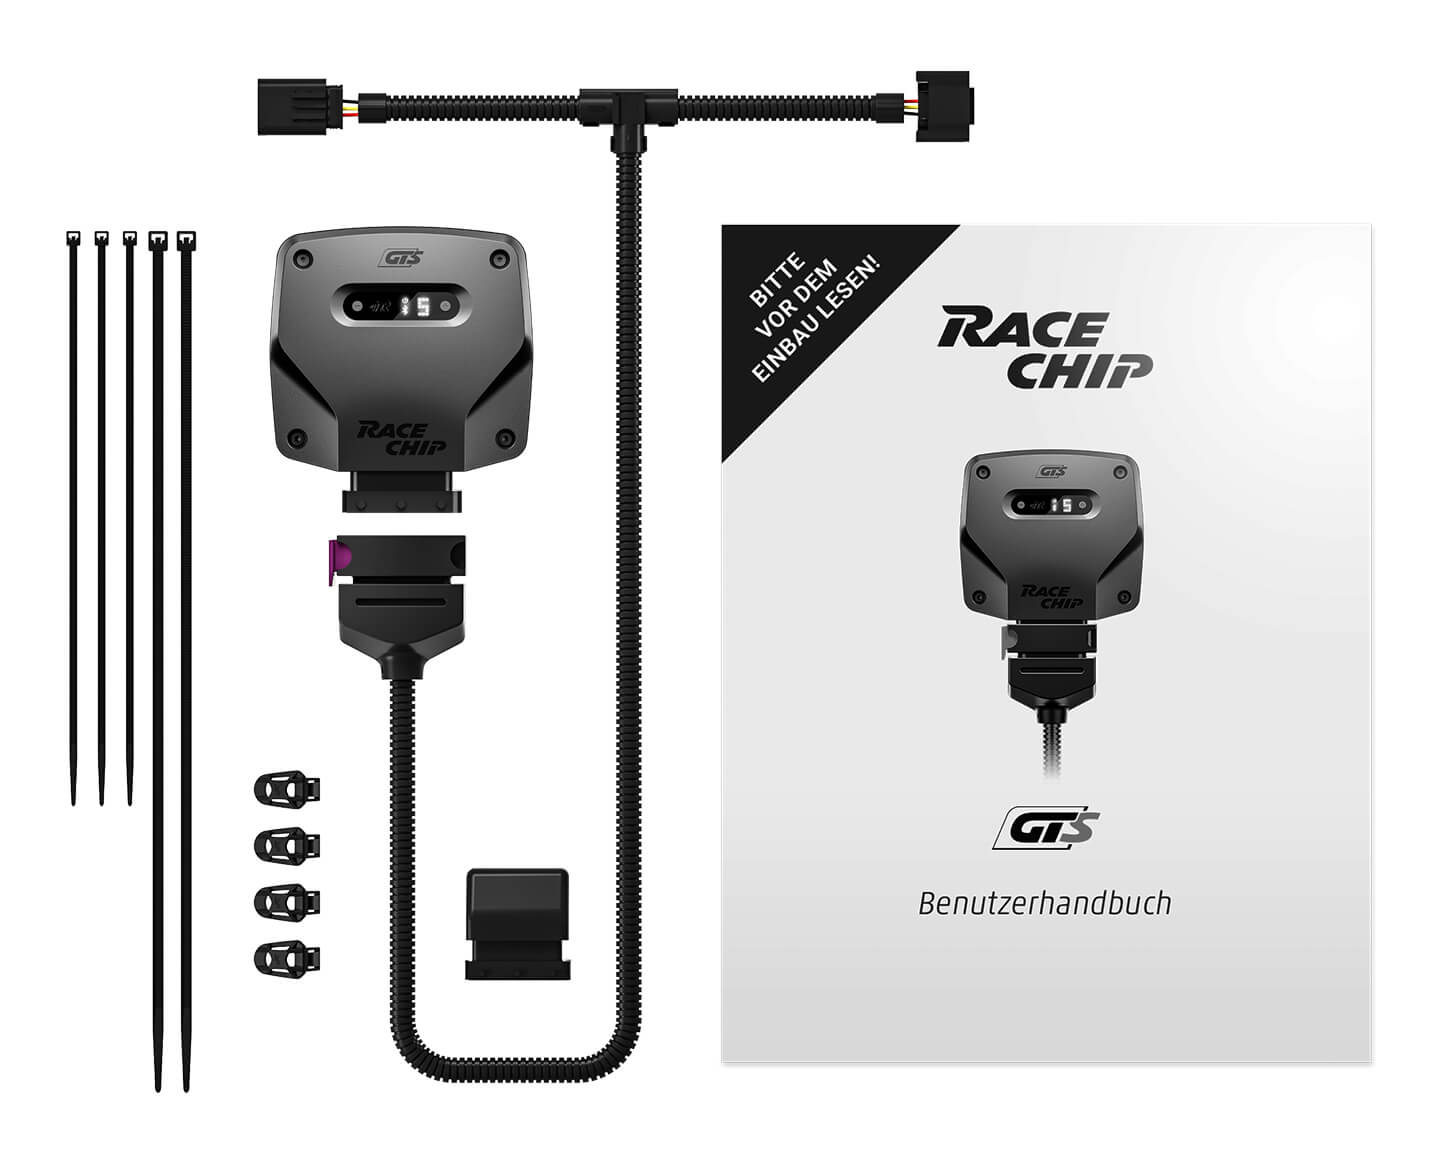 Racechip GTS - German Pickup Customs